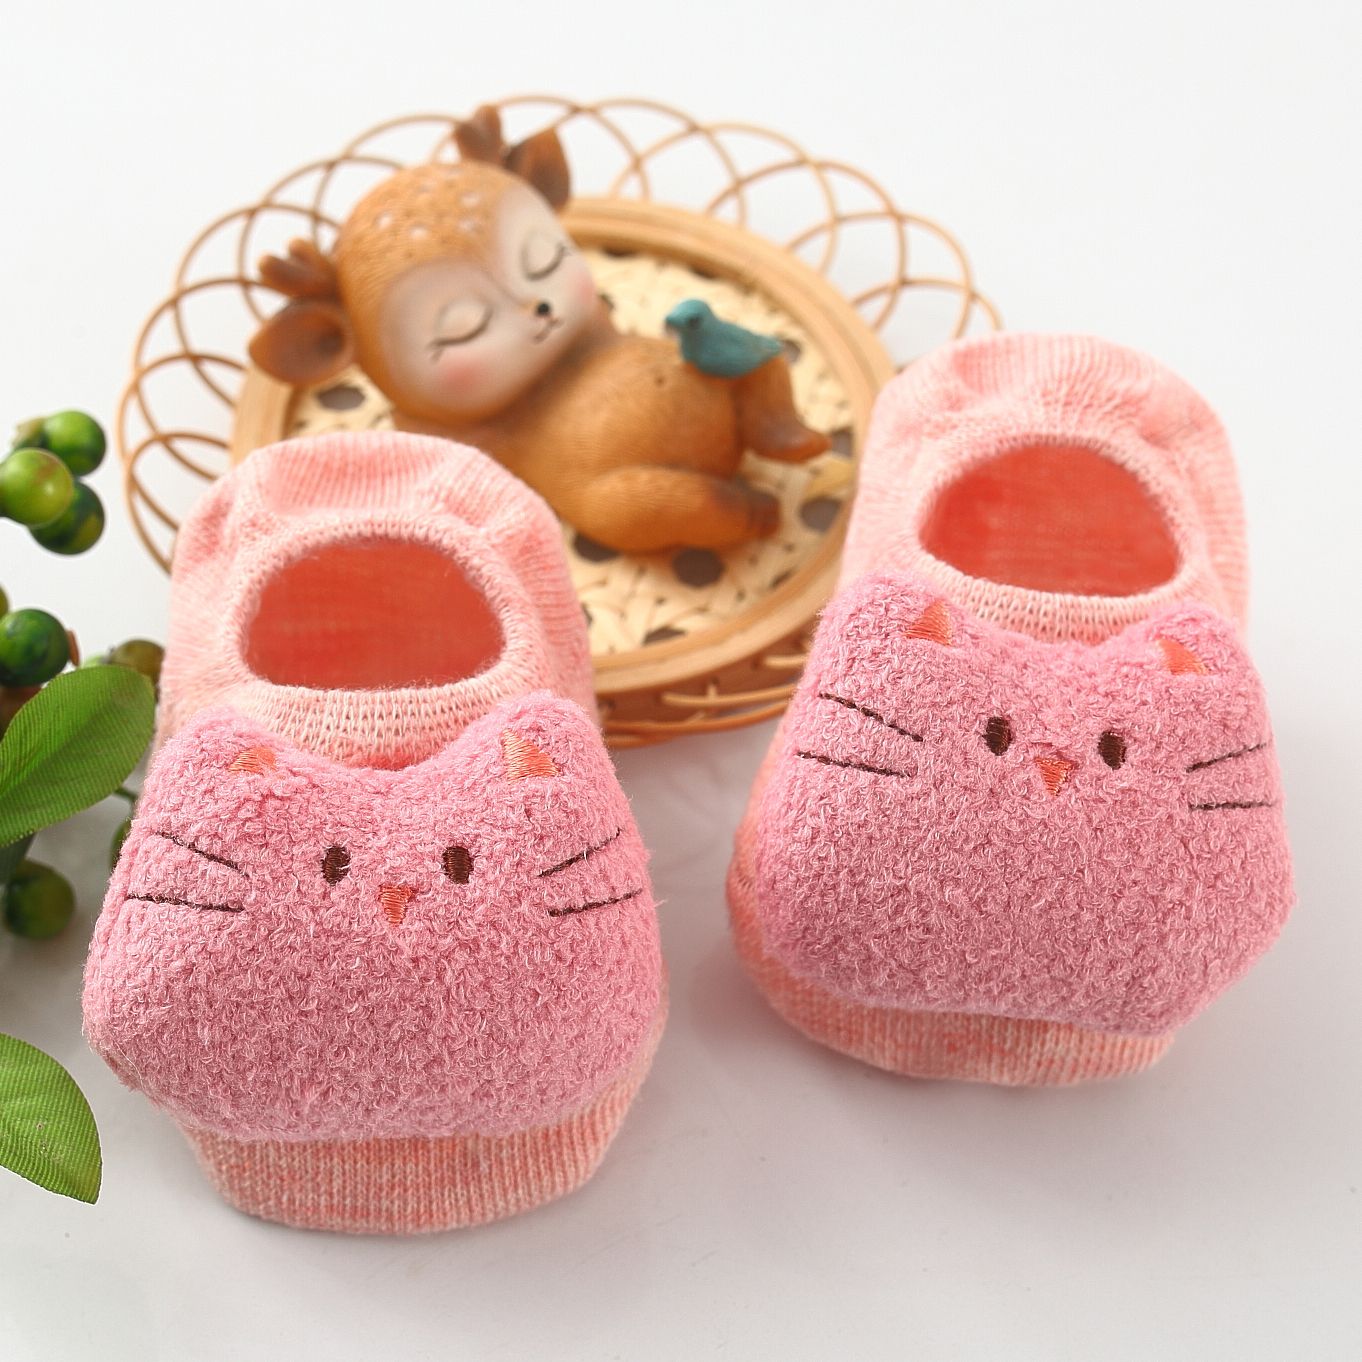 Baby/toddler Girl/Boy Childlike Anti-Slip Floor Socks with Cute Animal Design